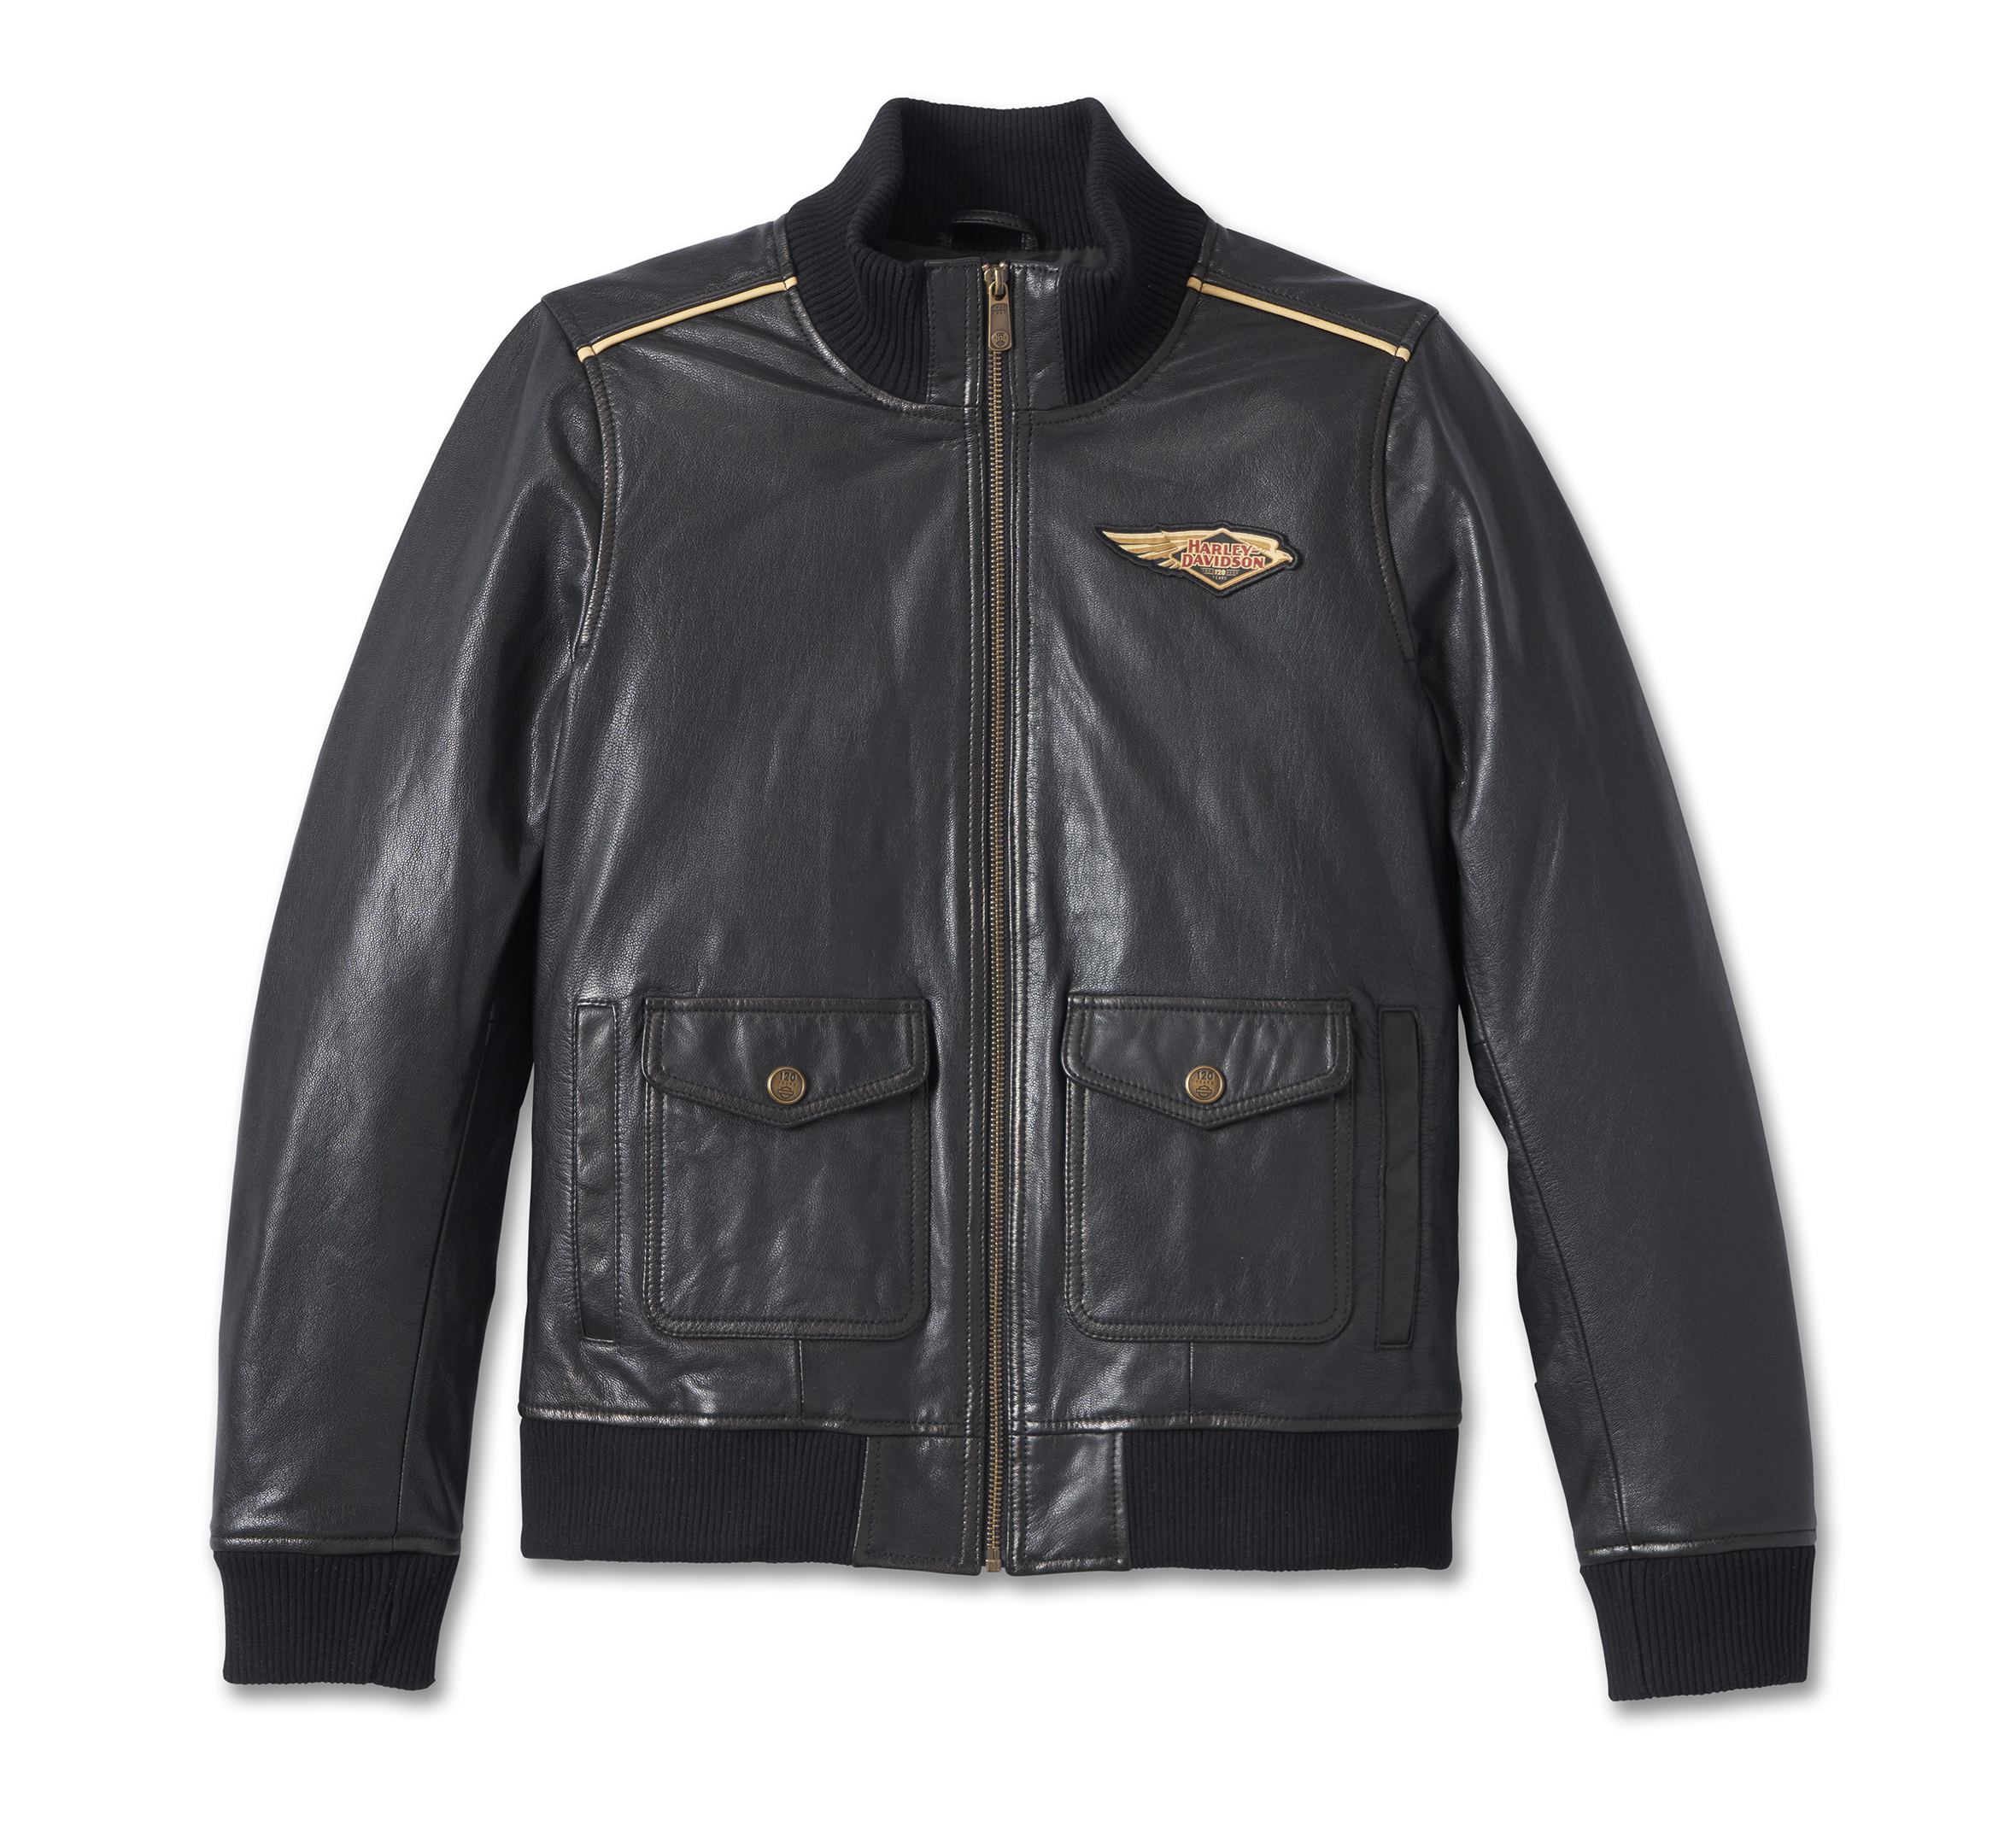 Women's Rib Knit Cuffs Bomer Biker Jacket -  Black / Real Leather / S